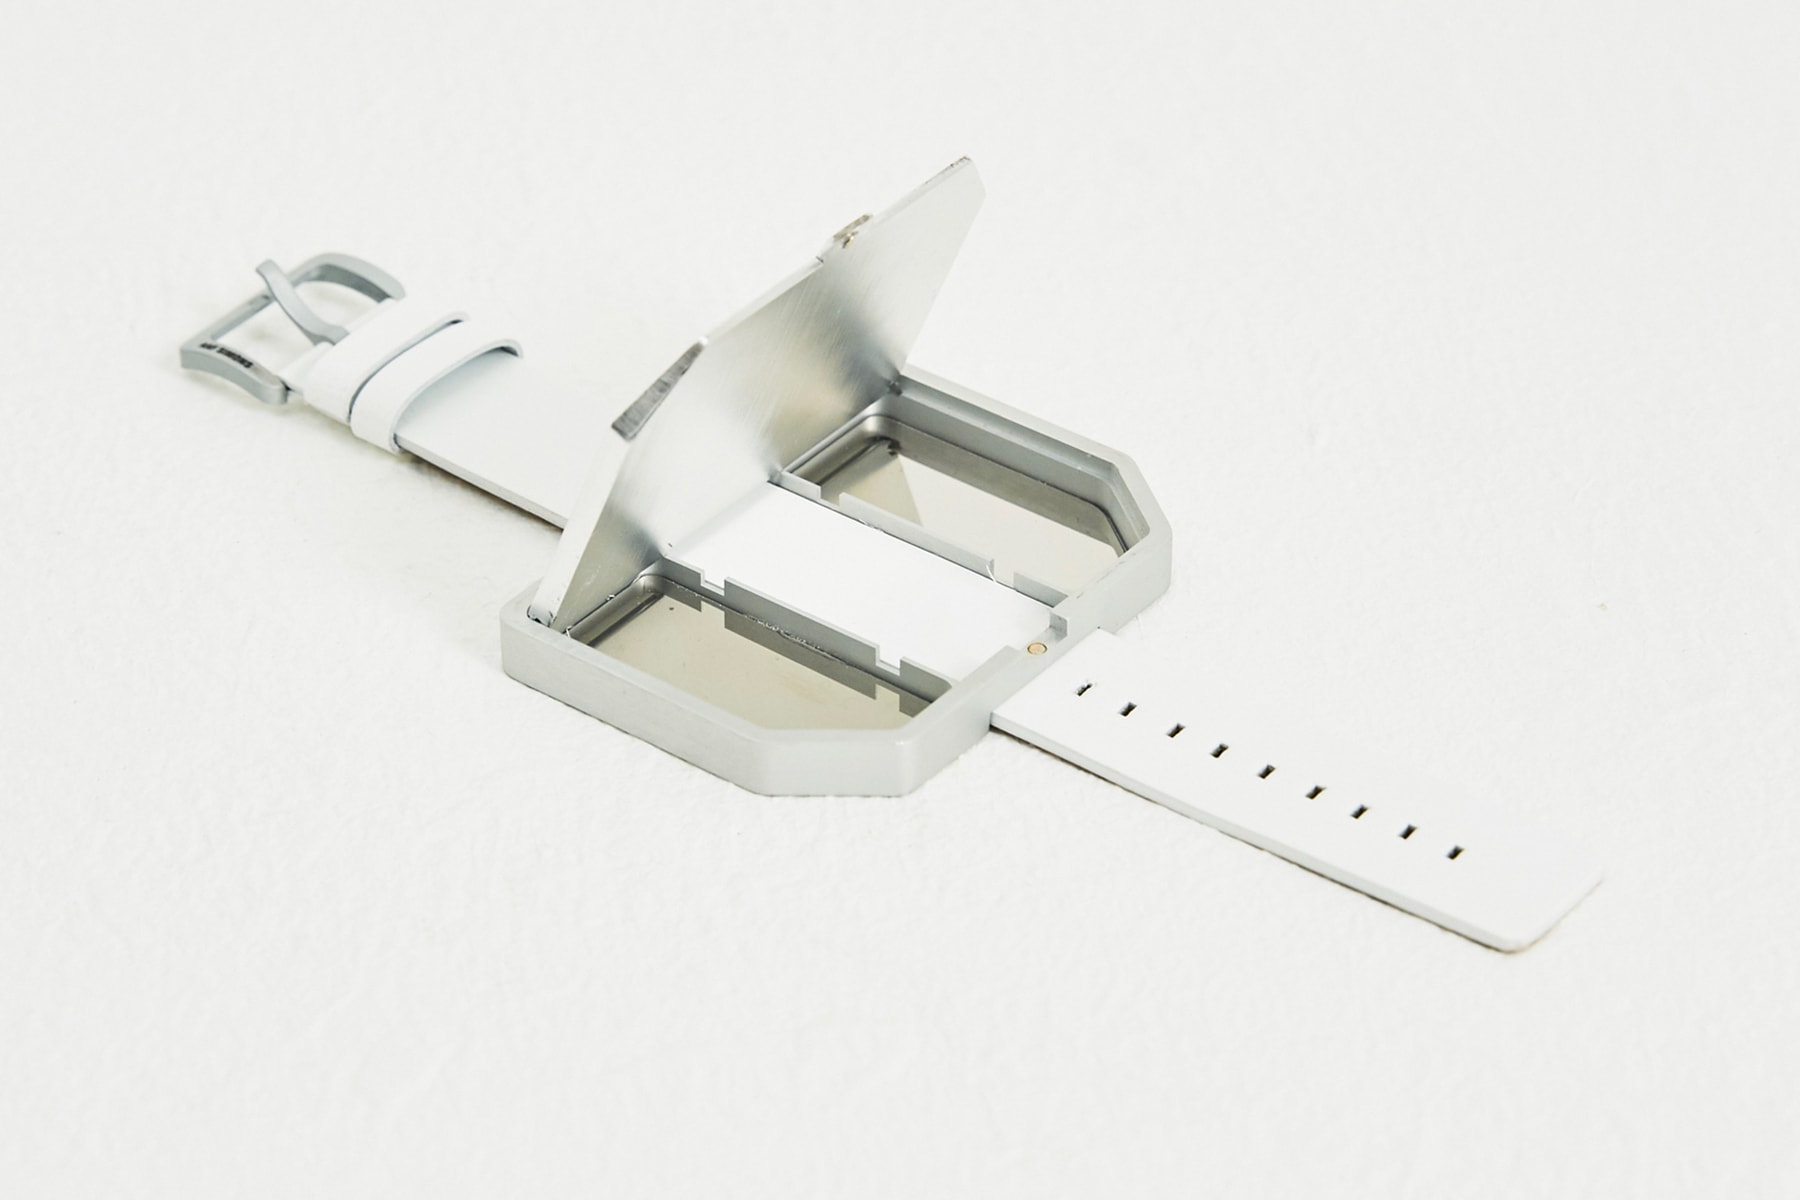 Raf Simons Fall Winter 2018 Space Bracelet Release aluminium white leather strap pillbox drugs accessories